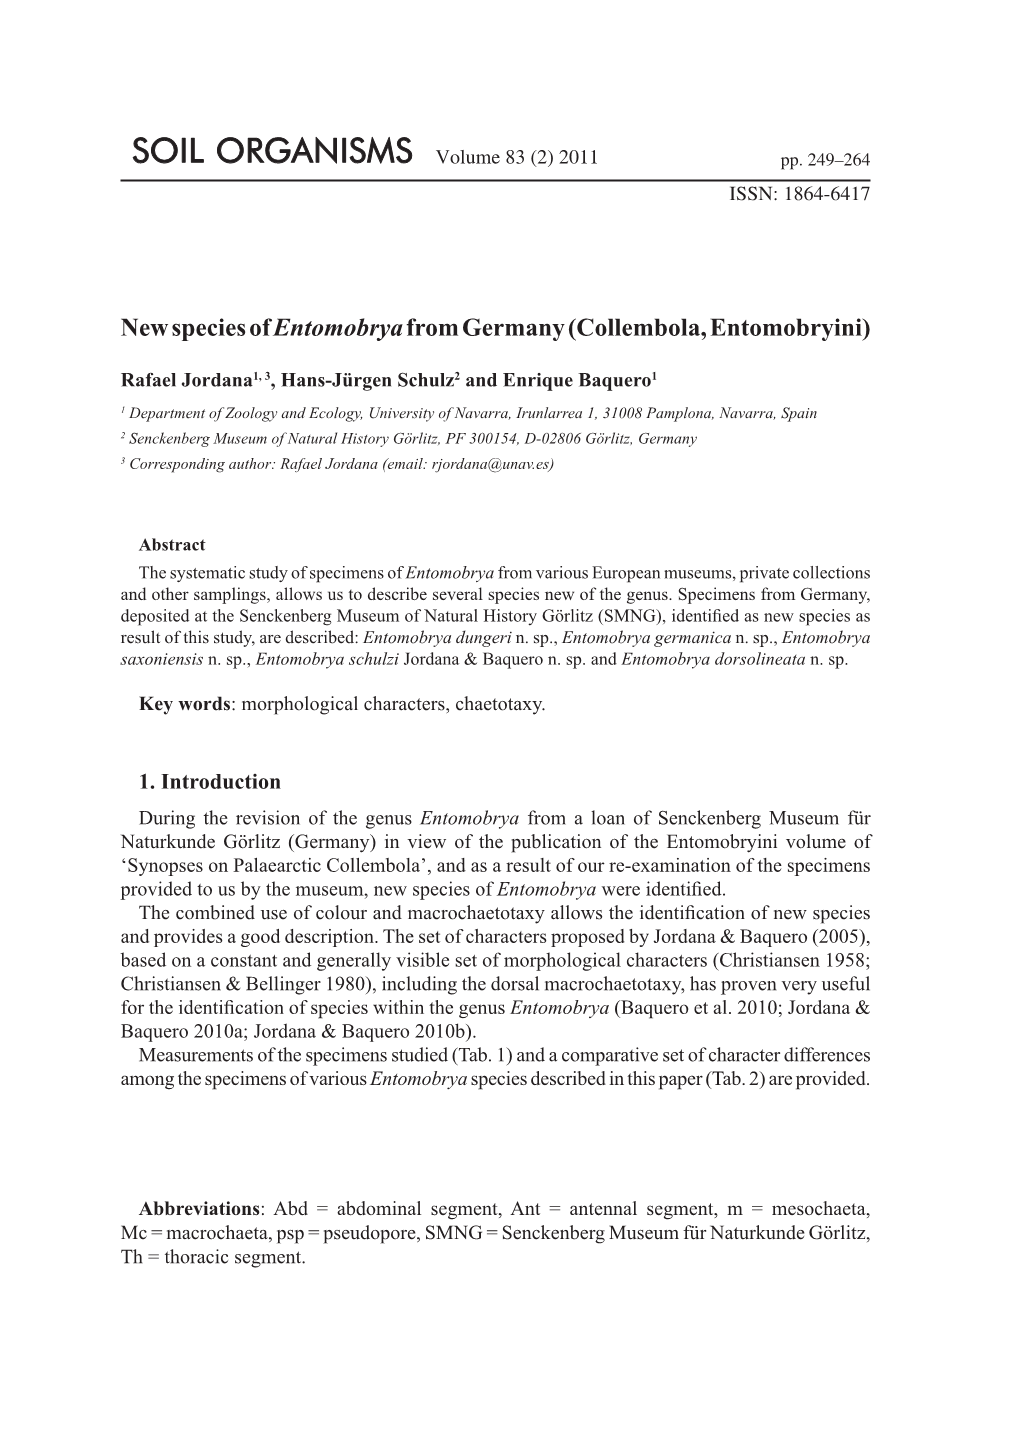 New Species of Entomobrya from Germany (Collembola, Entomobryini)